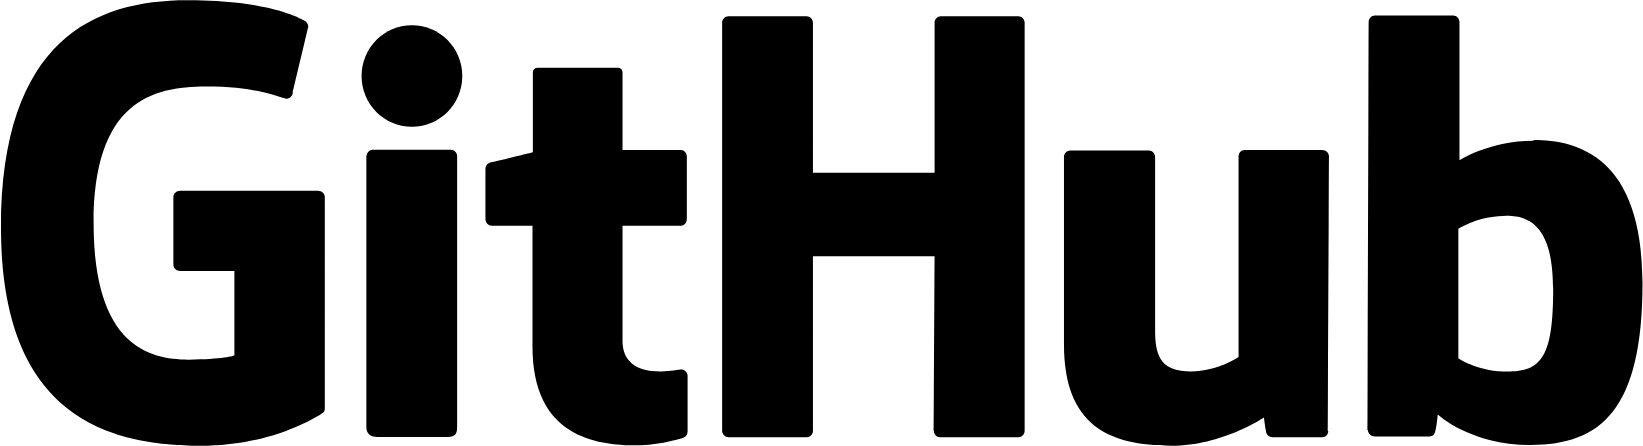 Github logo large (transparent PNG)